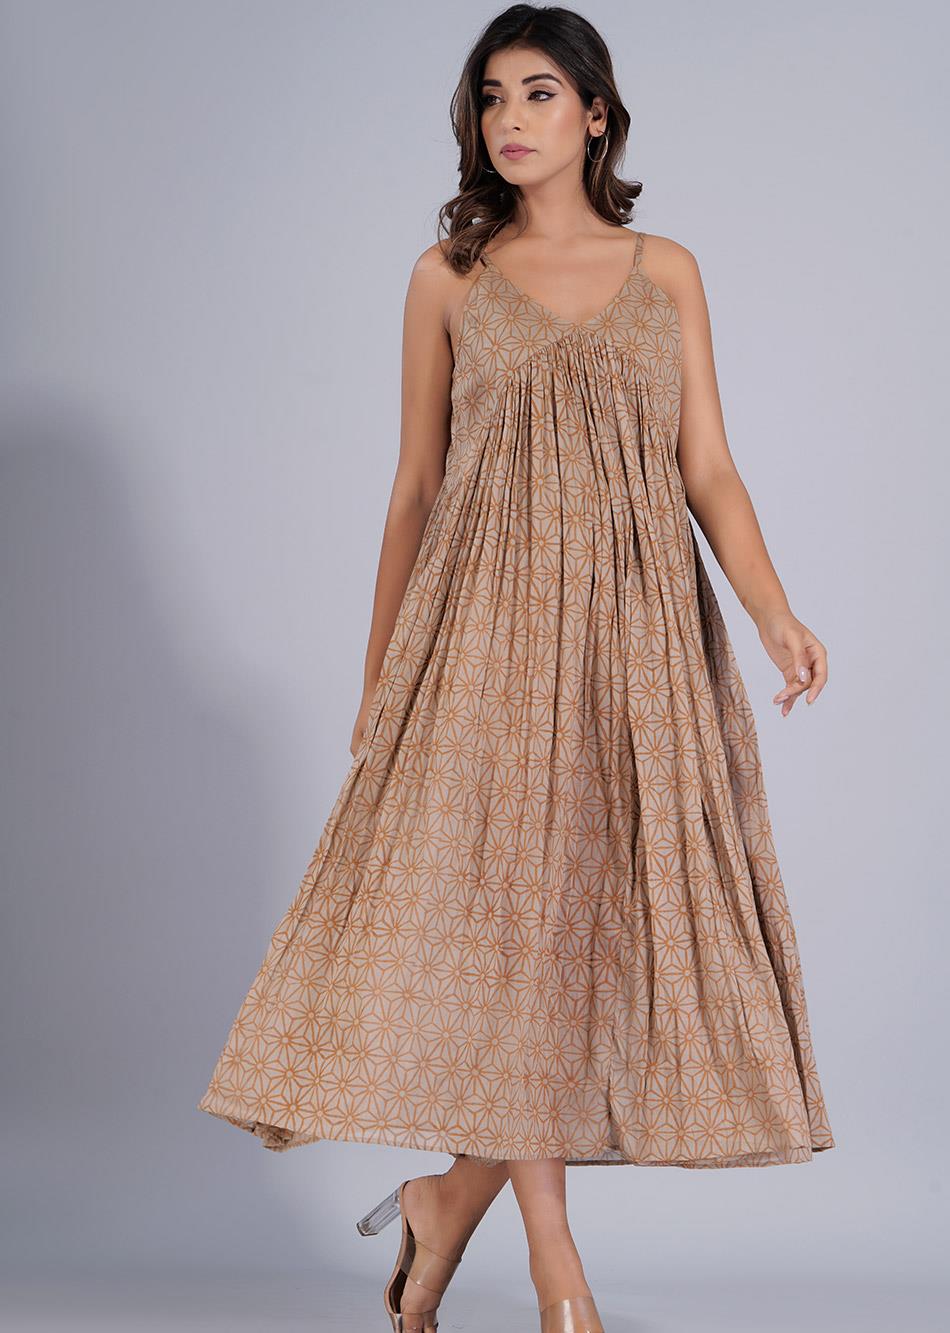 New Designer Western Dresses | Maharani Designer Boutique